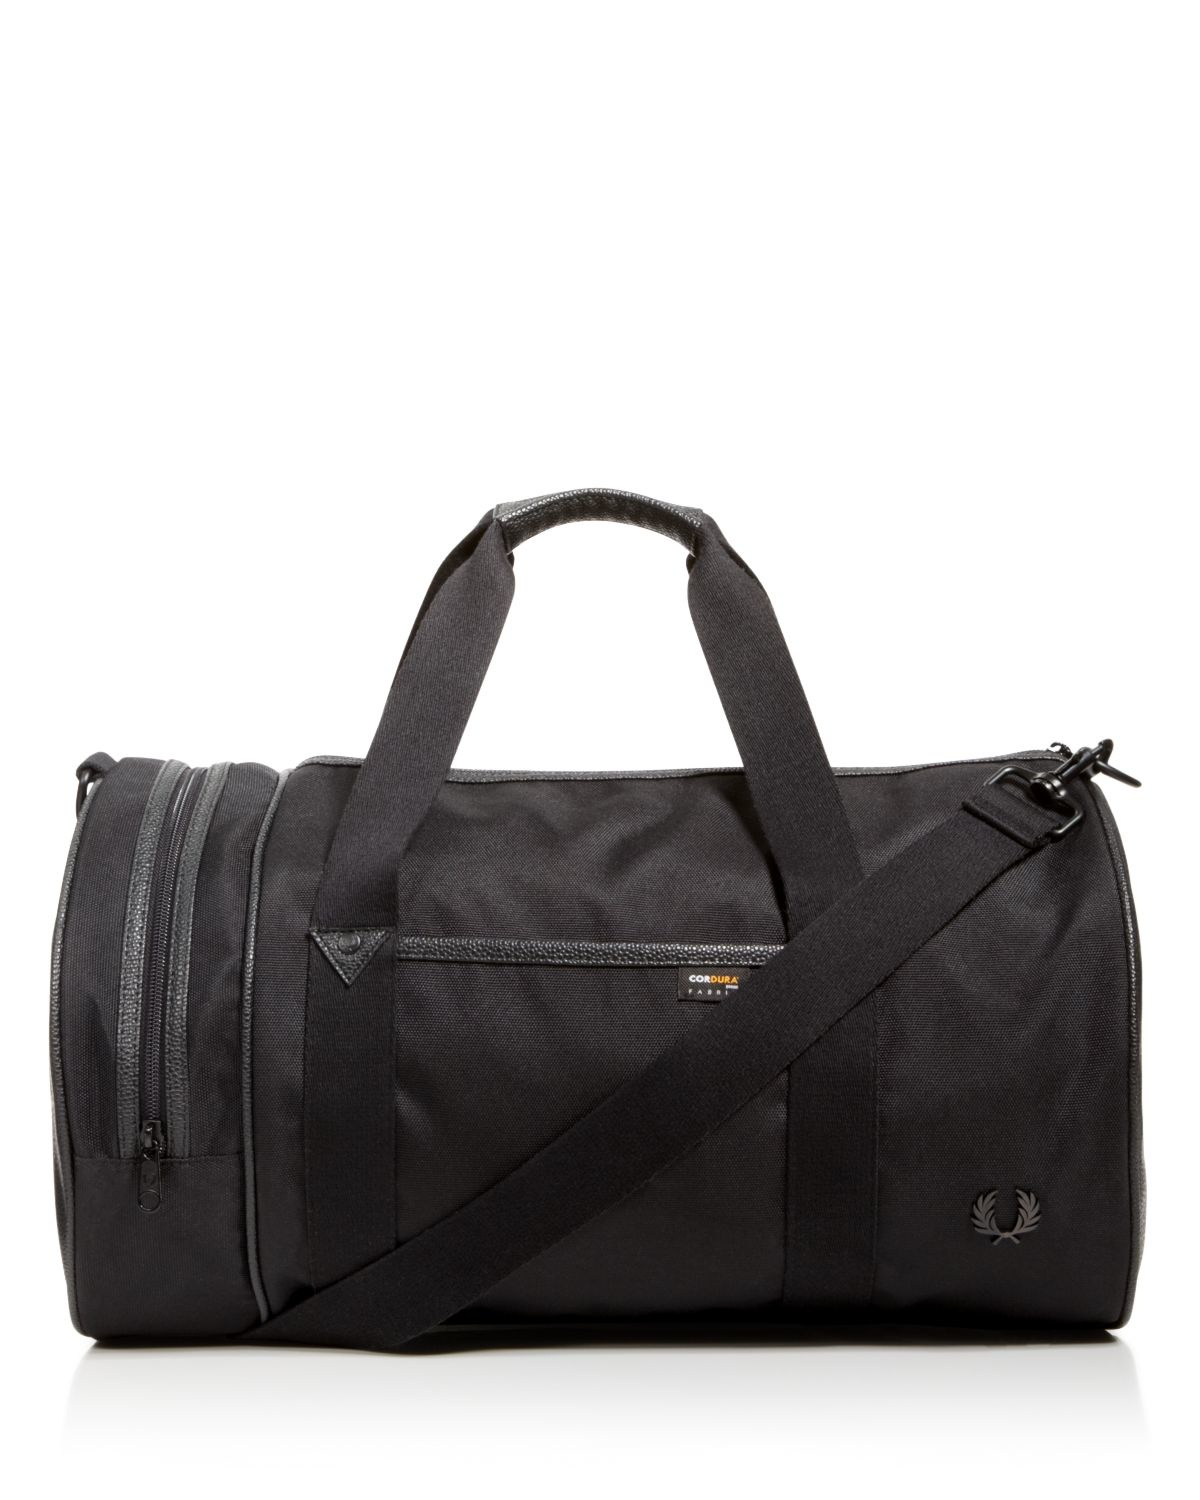 Lyst - Fred perry Barrel Bag in Black for Men